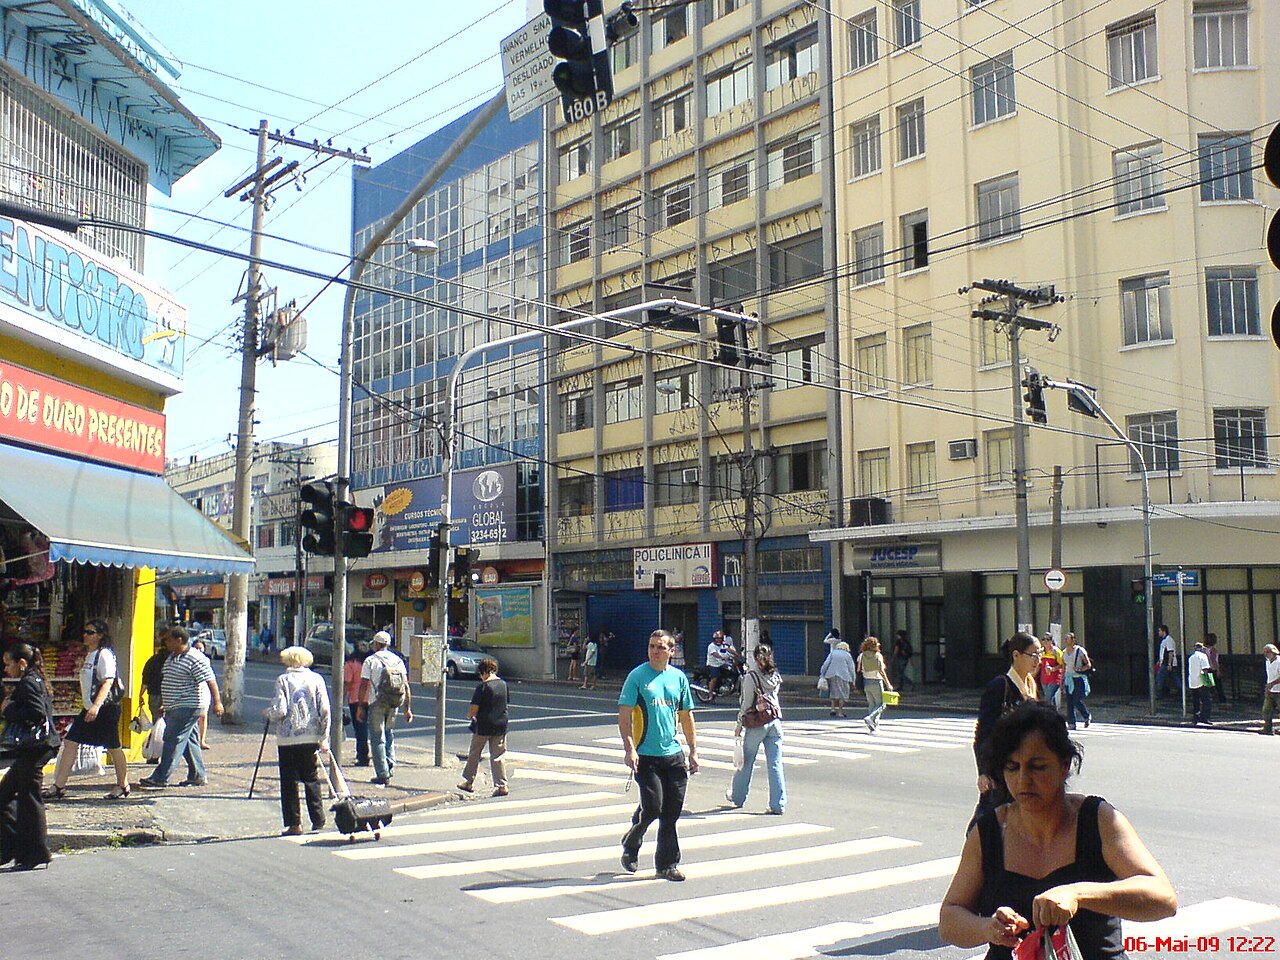 File:Rua Jose Paulino - Sao Paulo - panoramio.jpg - Wikimedia Commons